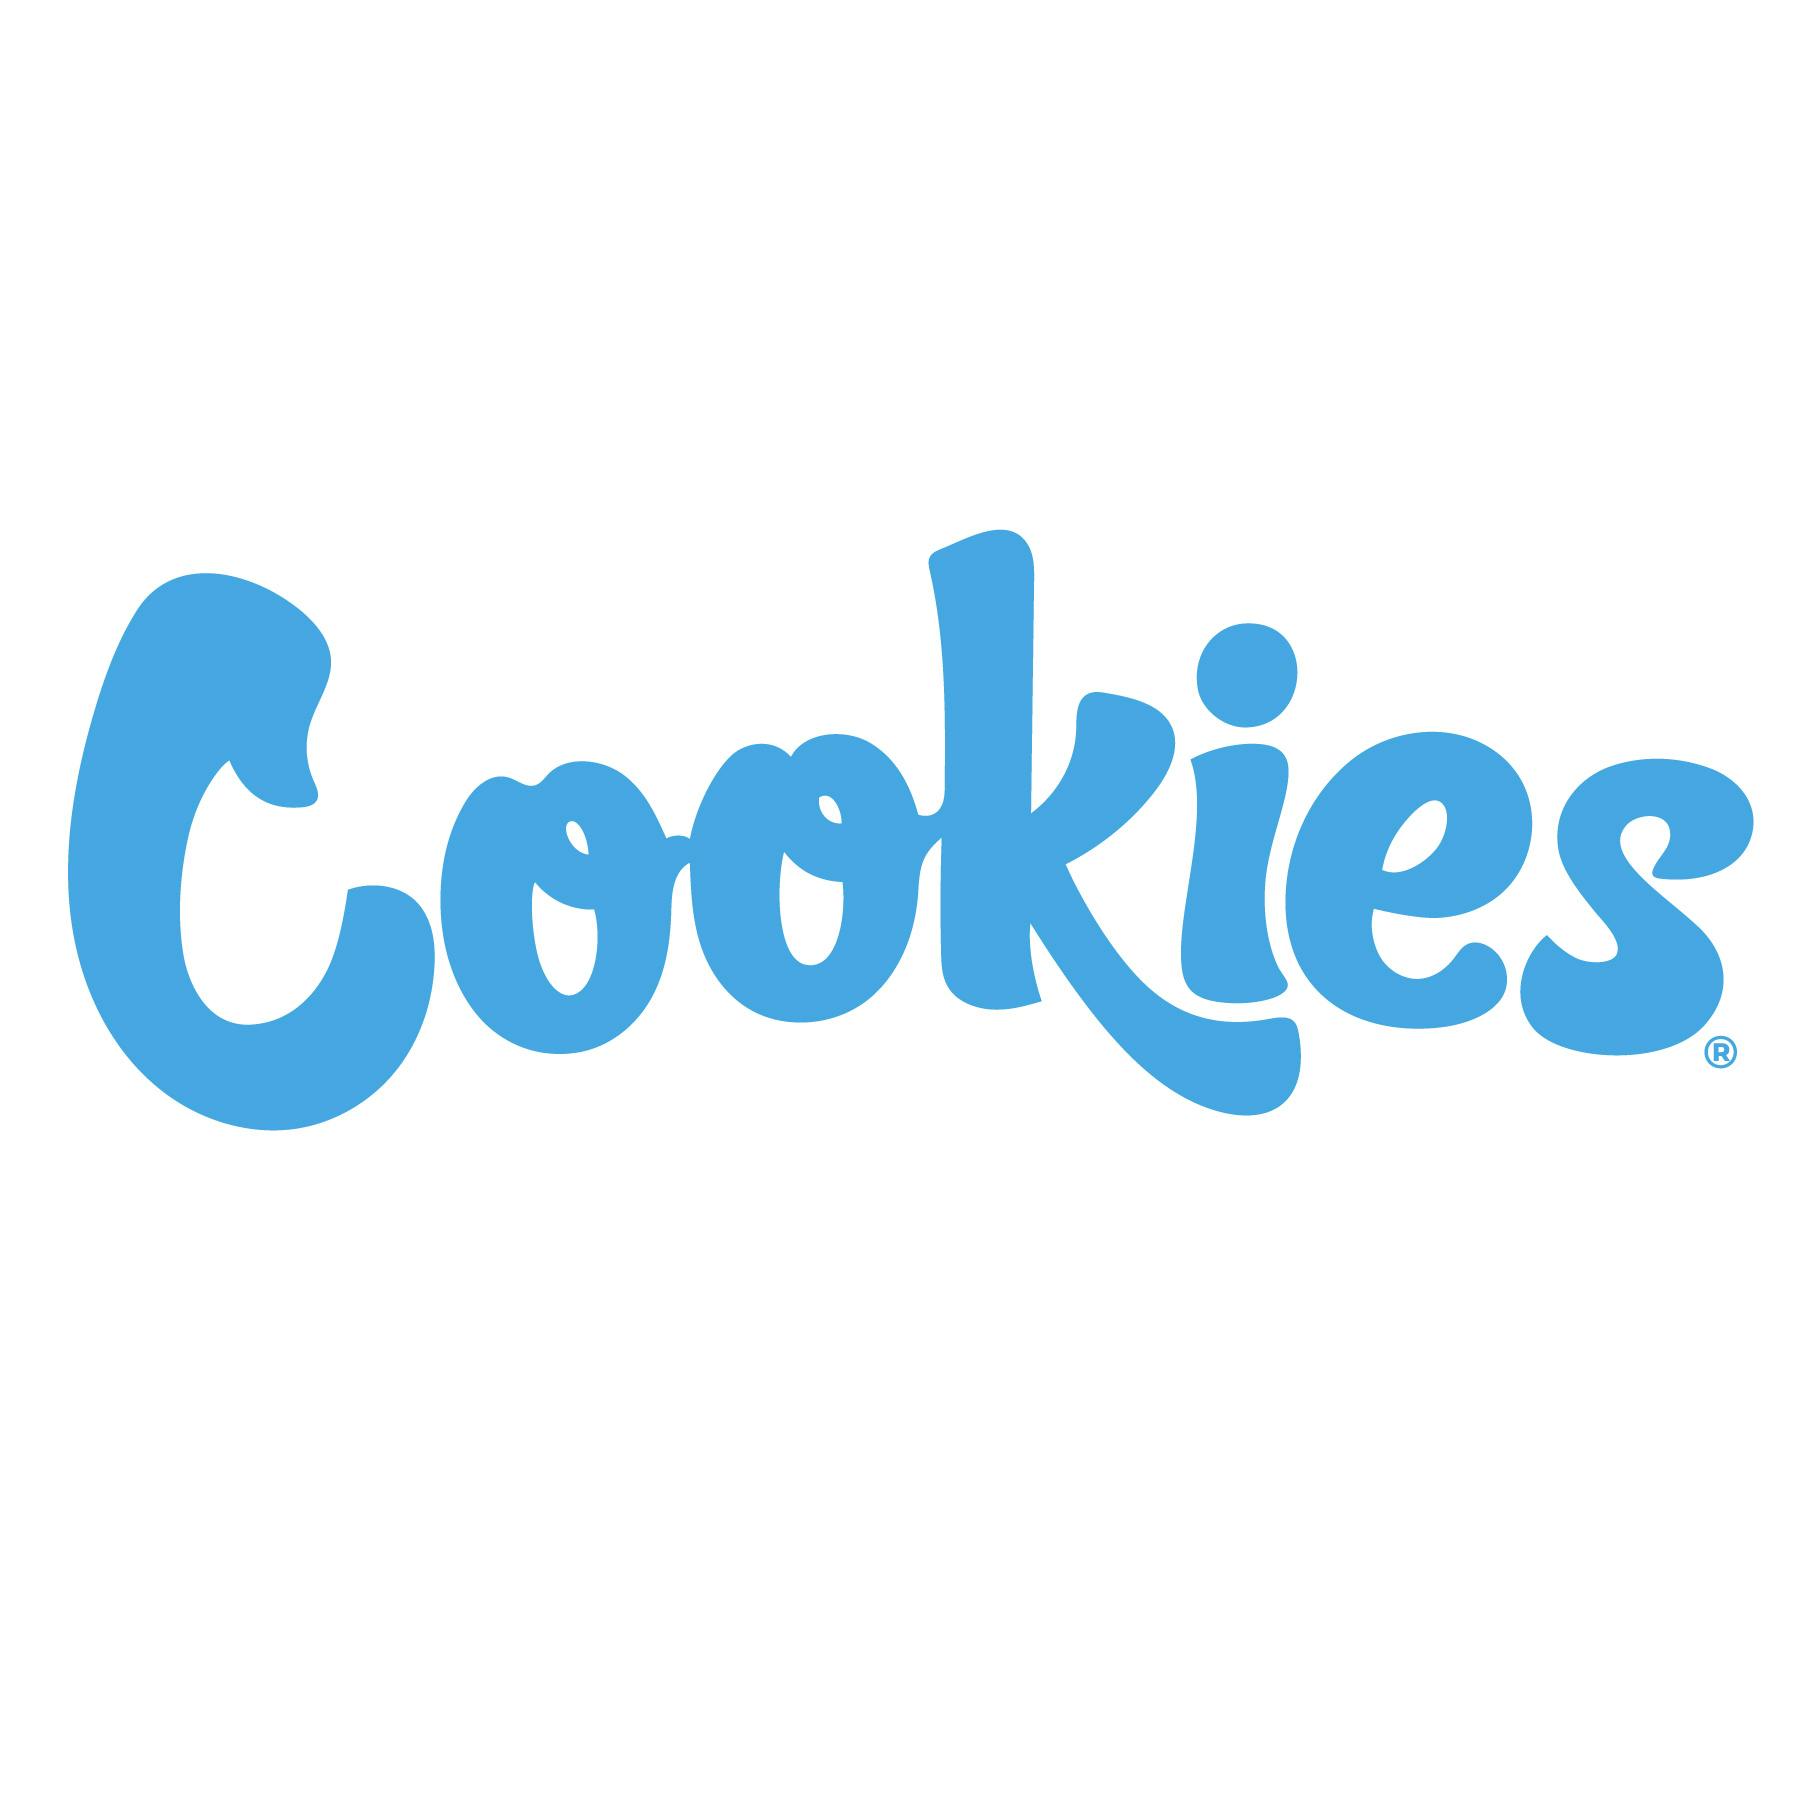 Cookies Oxford logo